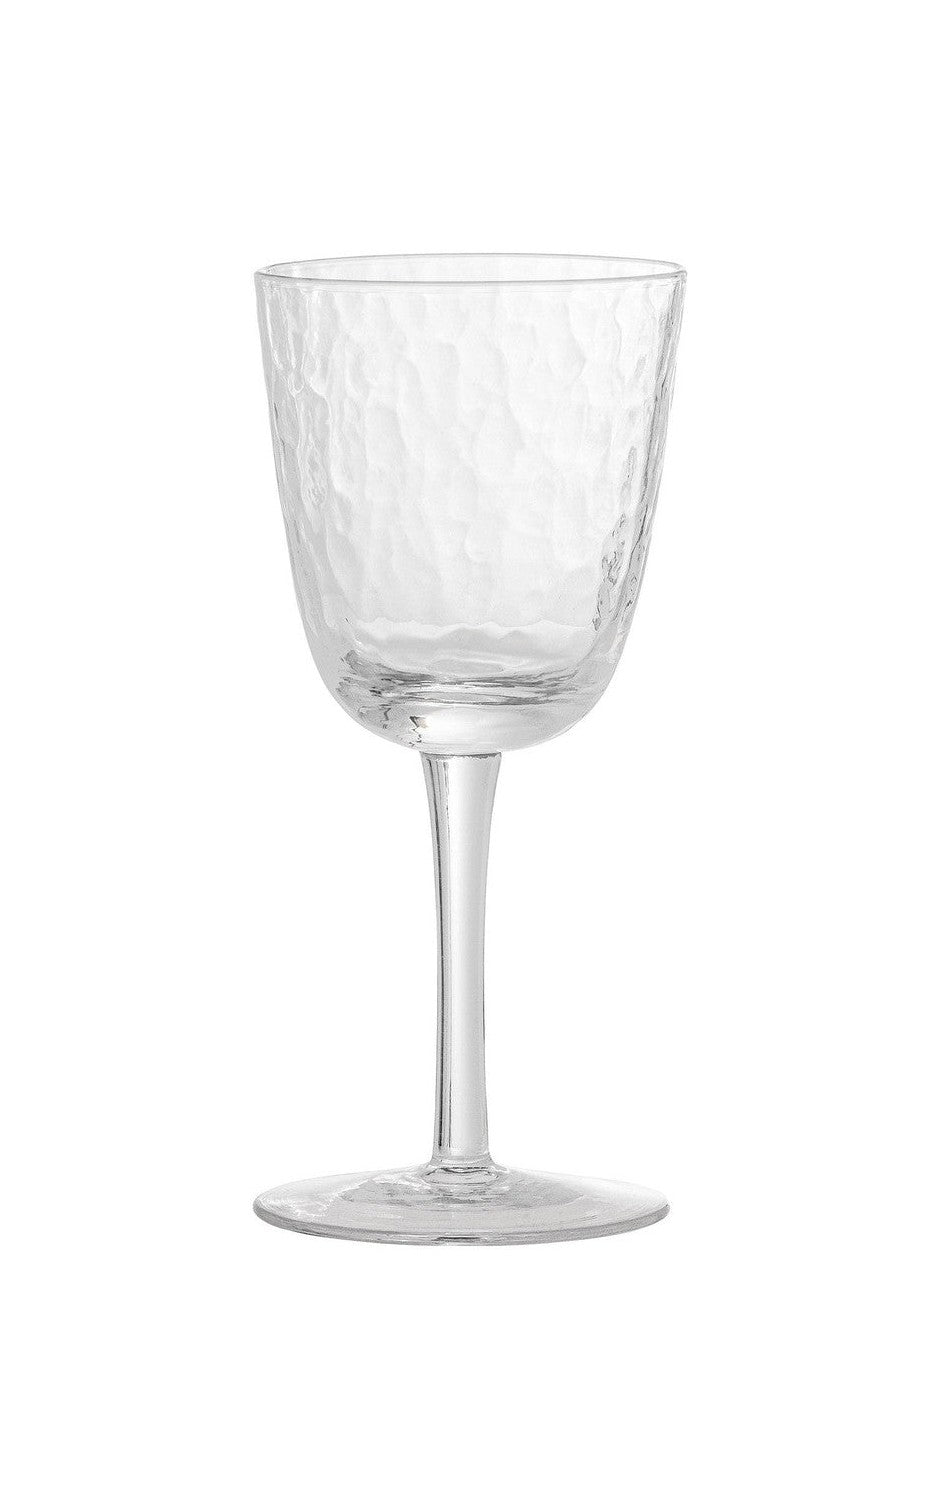 Bloomingville Asali vinglas, klart, glas